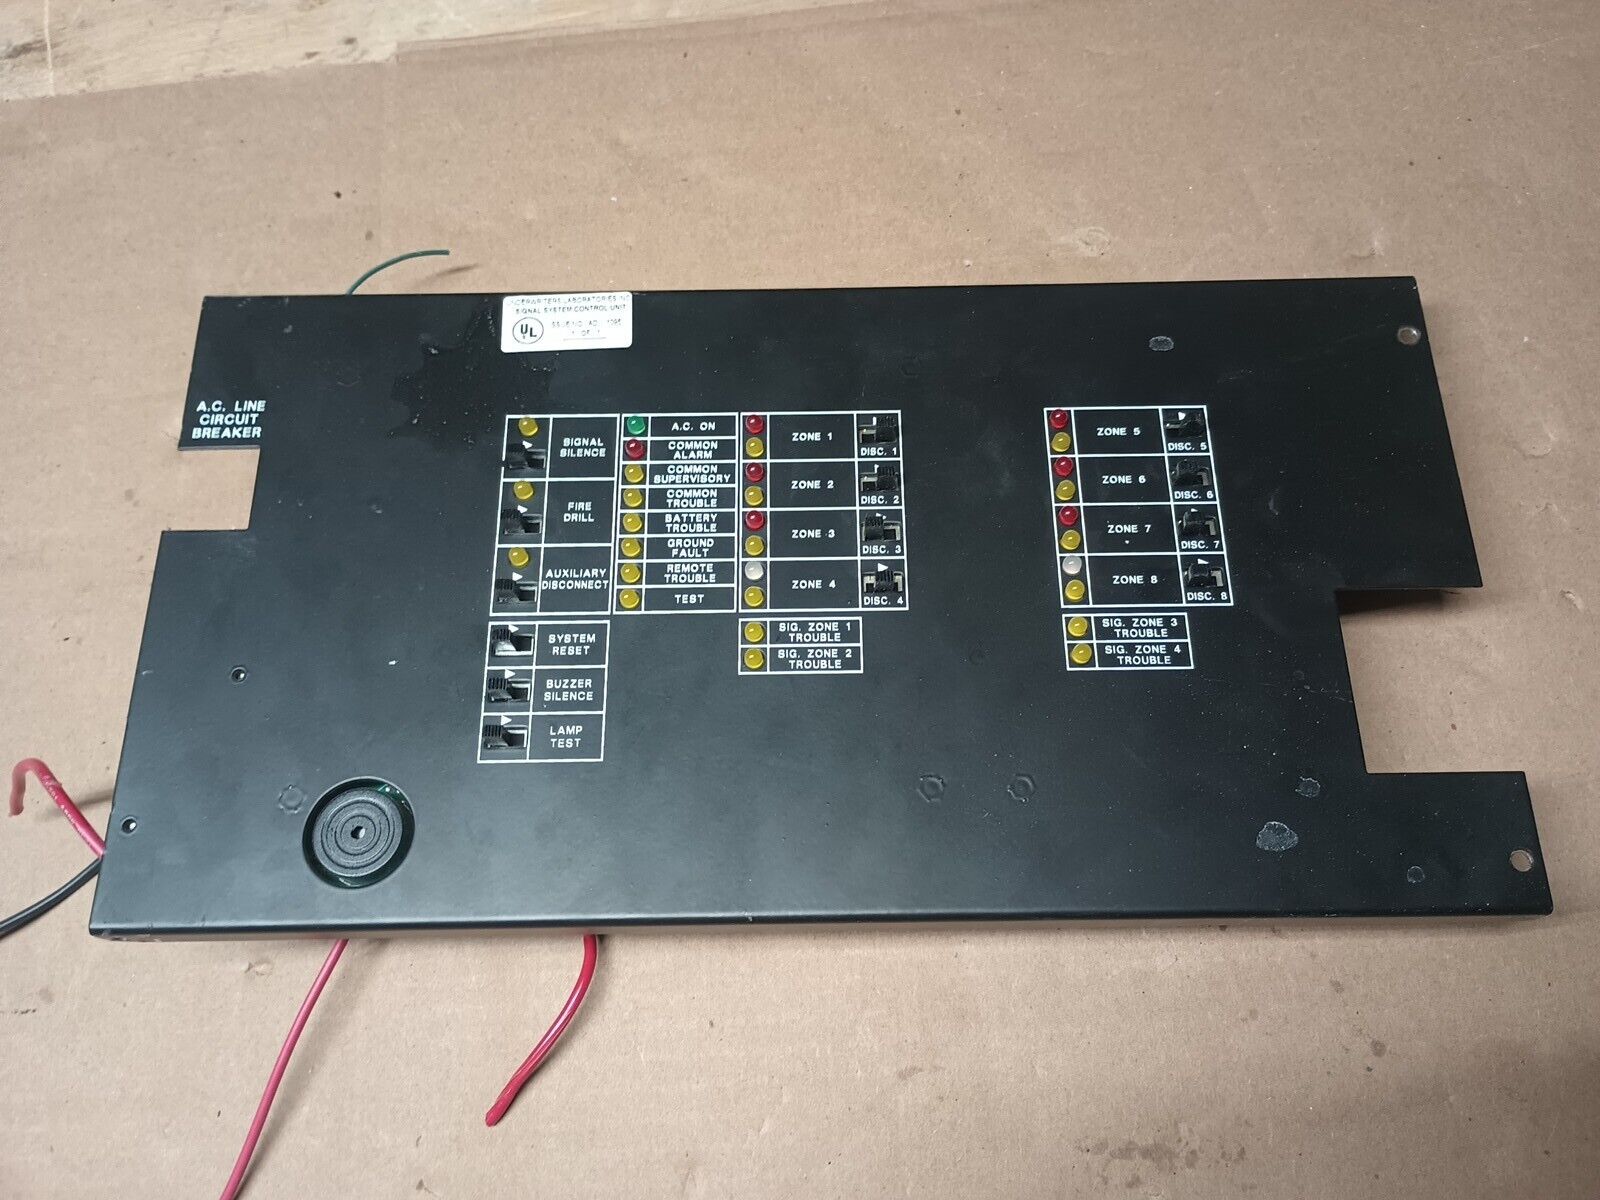 Gamewell Flex 4 MD-585 rev.h Fire Alarm Control Panel Board 